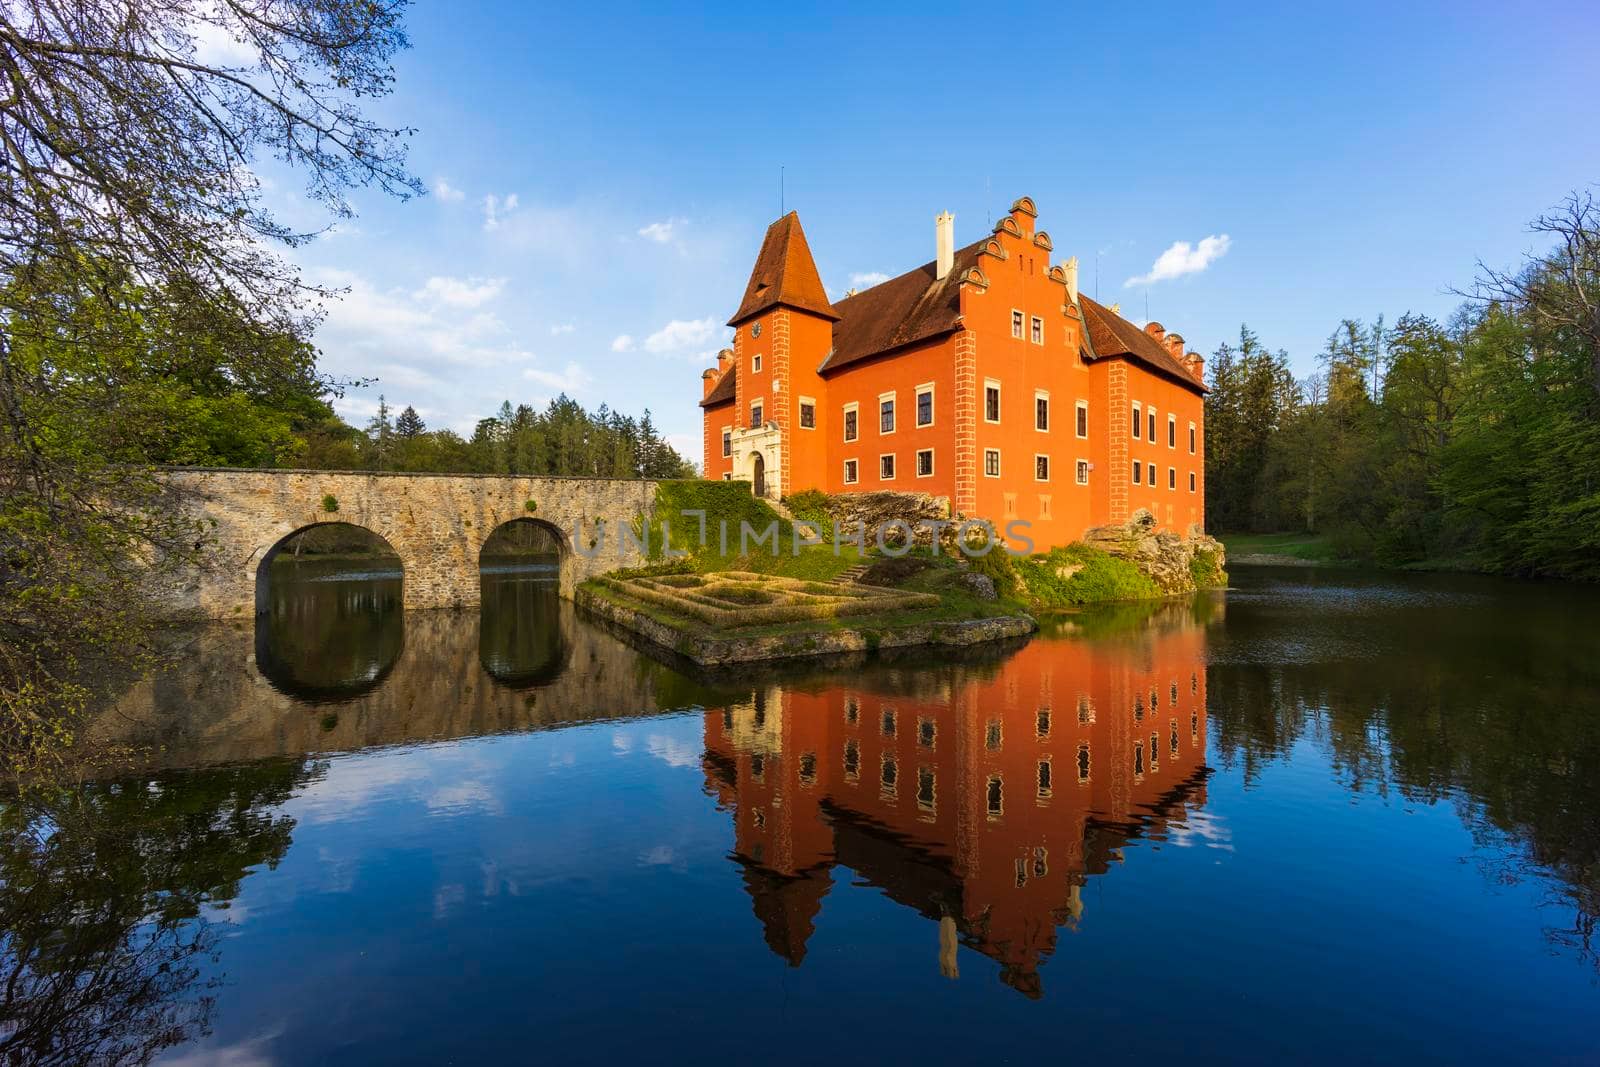 Cervena Lhota castle in Southern Bohemia, Czech Republic by phbcz